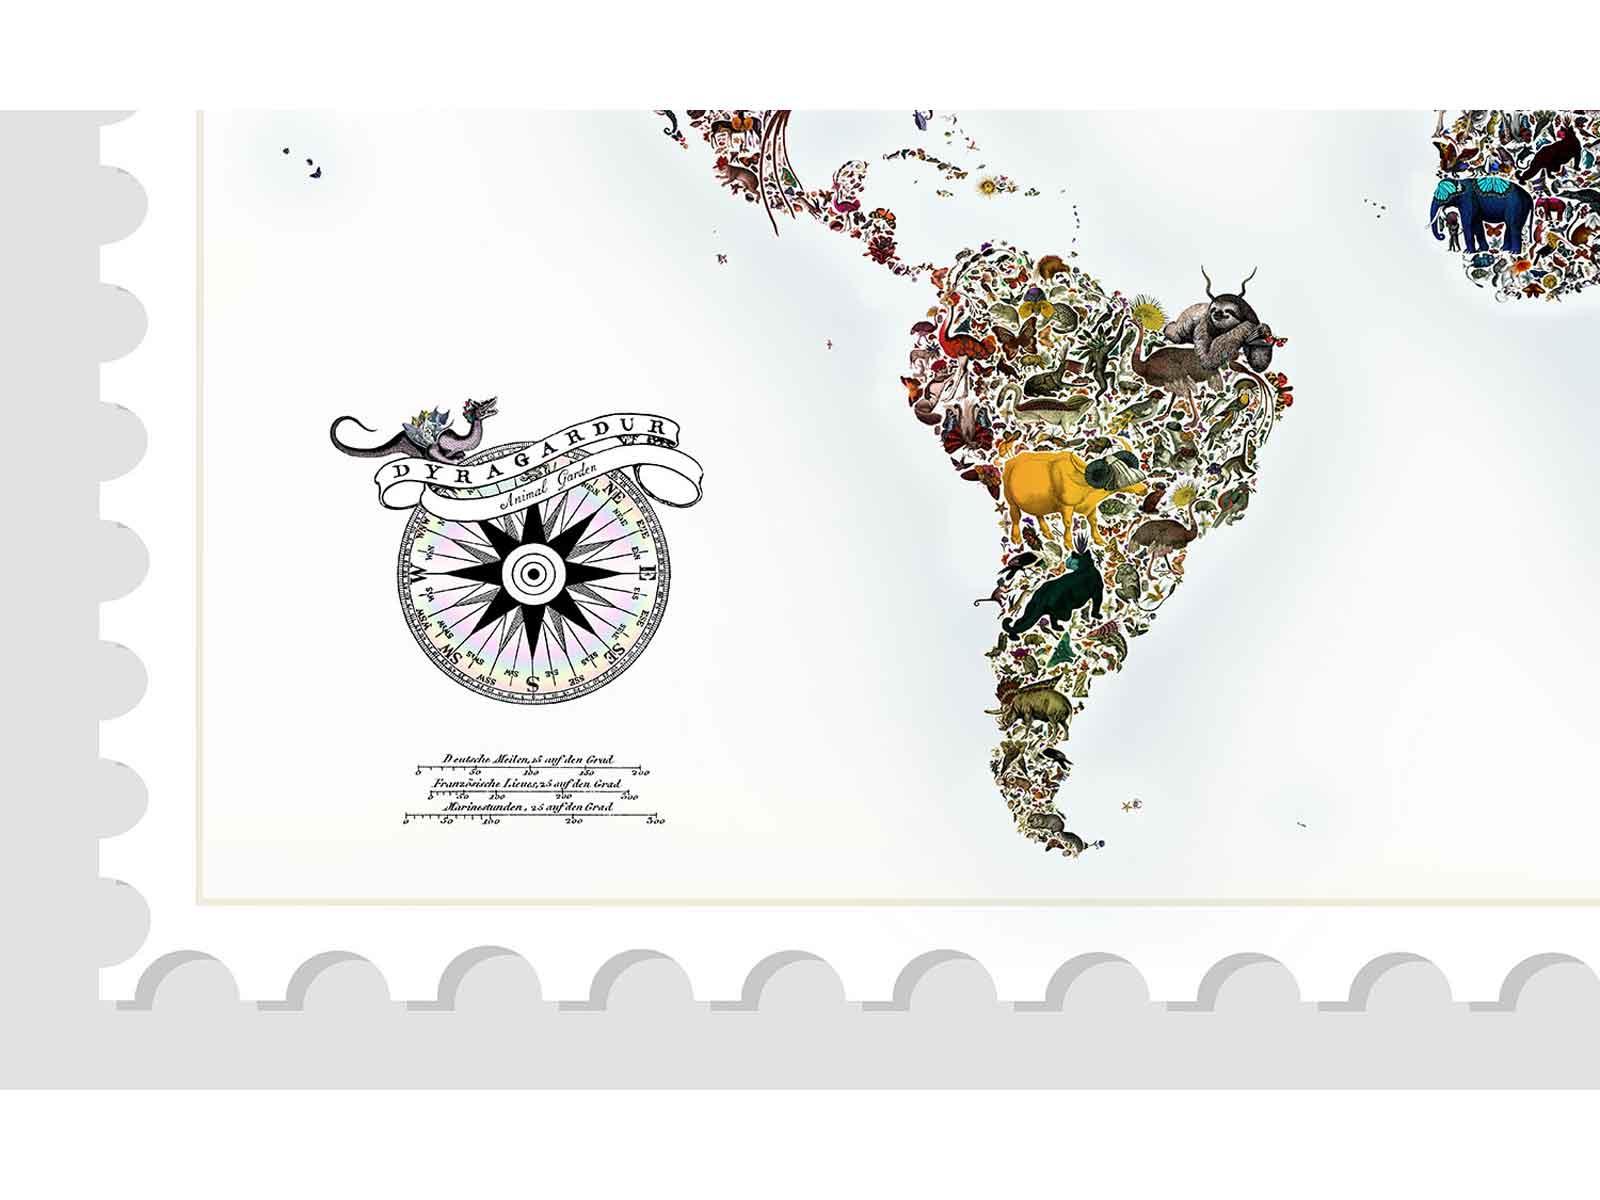 world stamps art print to hang on the wall